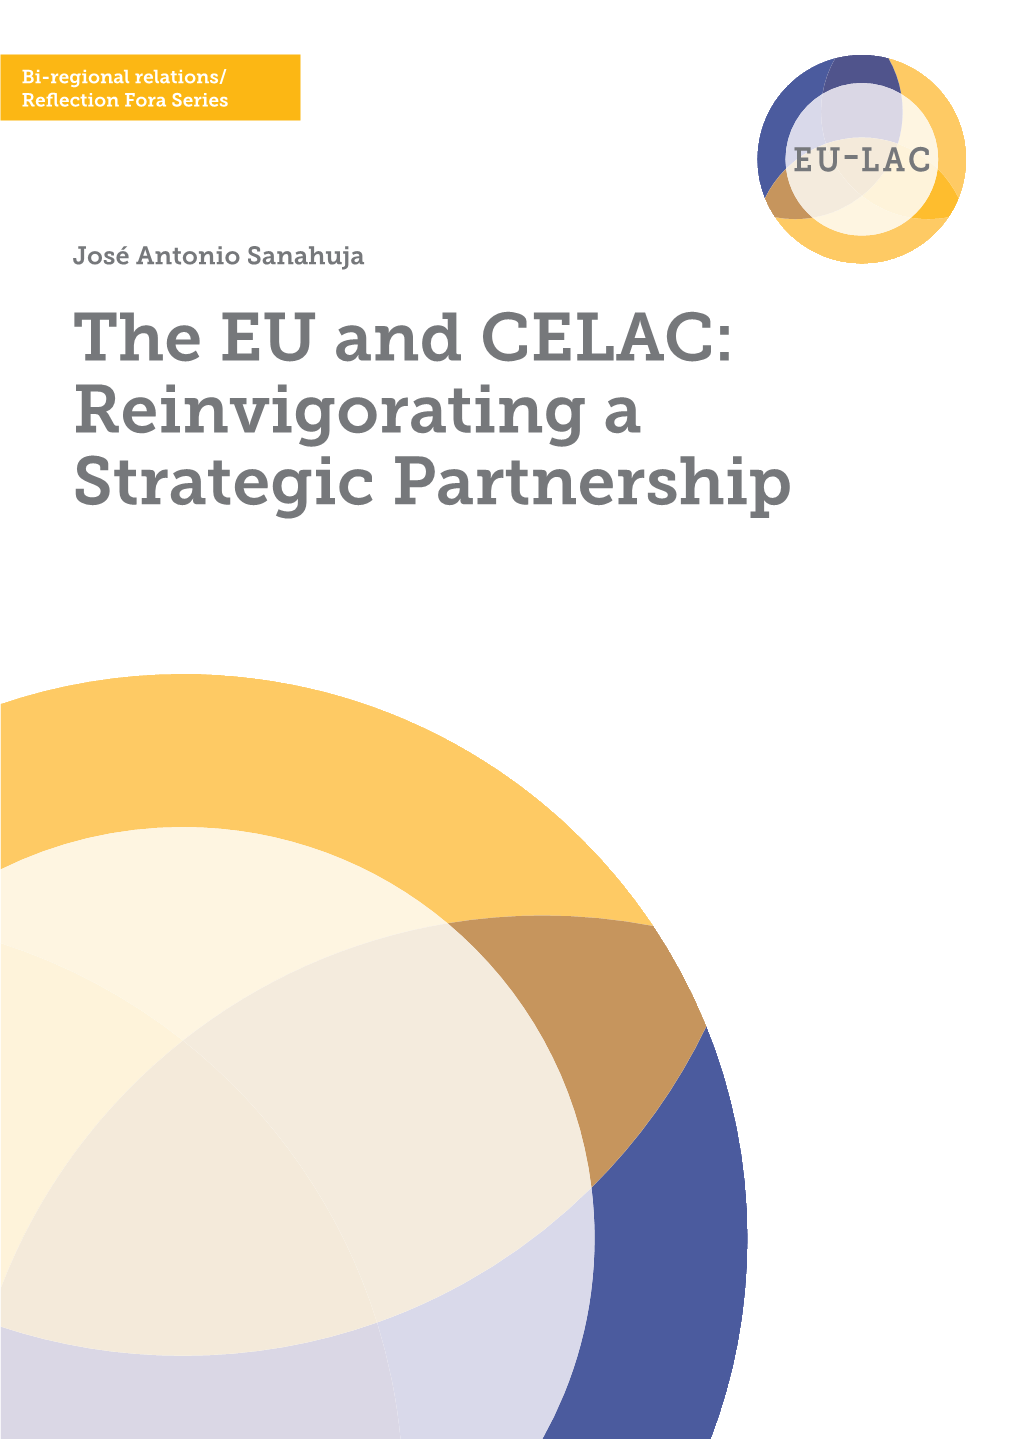 The EU and CELAC: Reinvigorating a Strategic Partnership 2 EU-LAC FOUNDATION, 2015 Hagedornstraße 22 20149 Hamburg, Germany